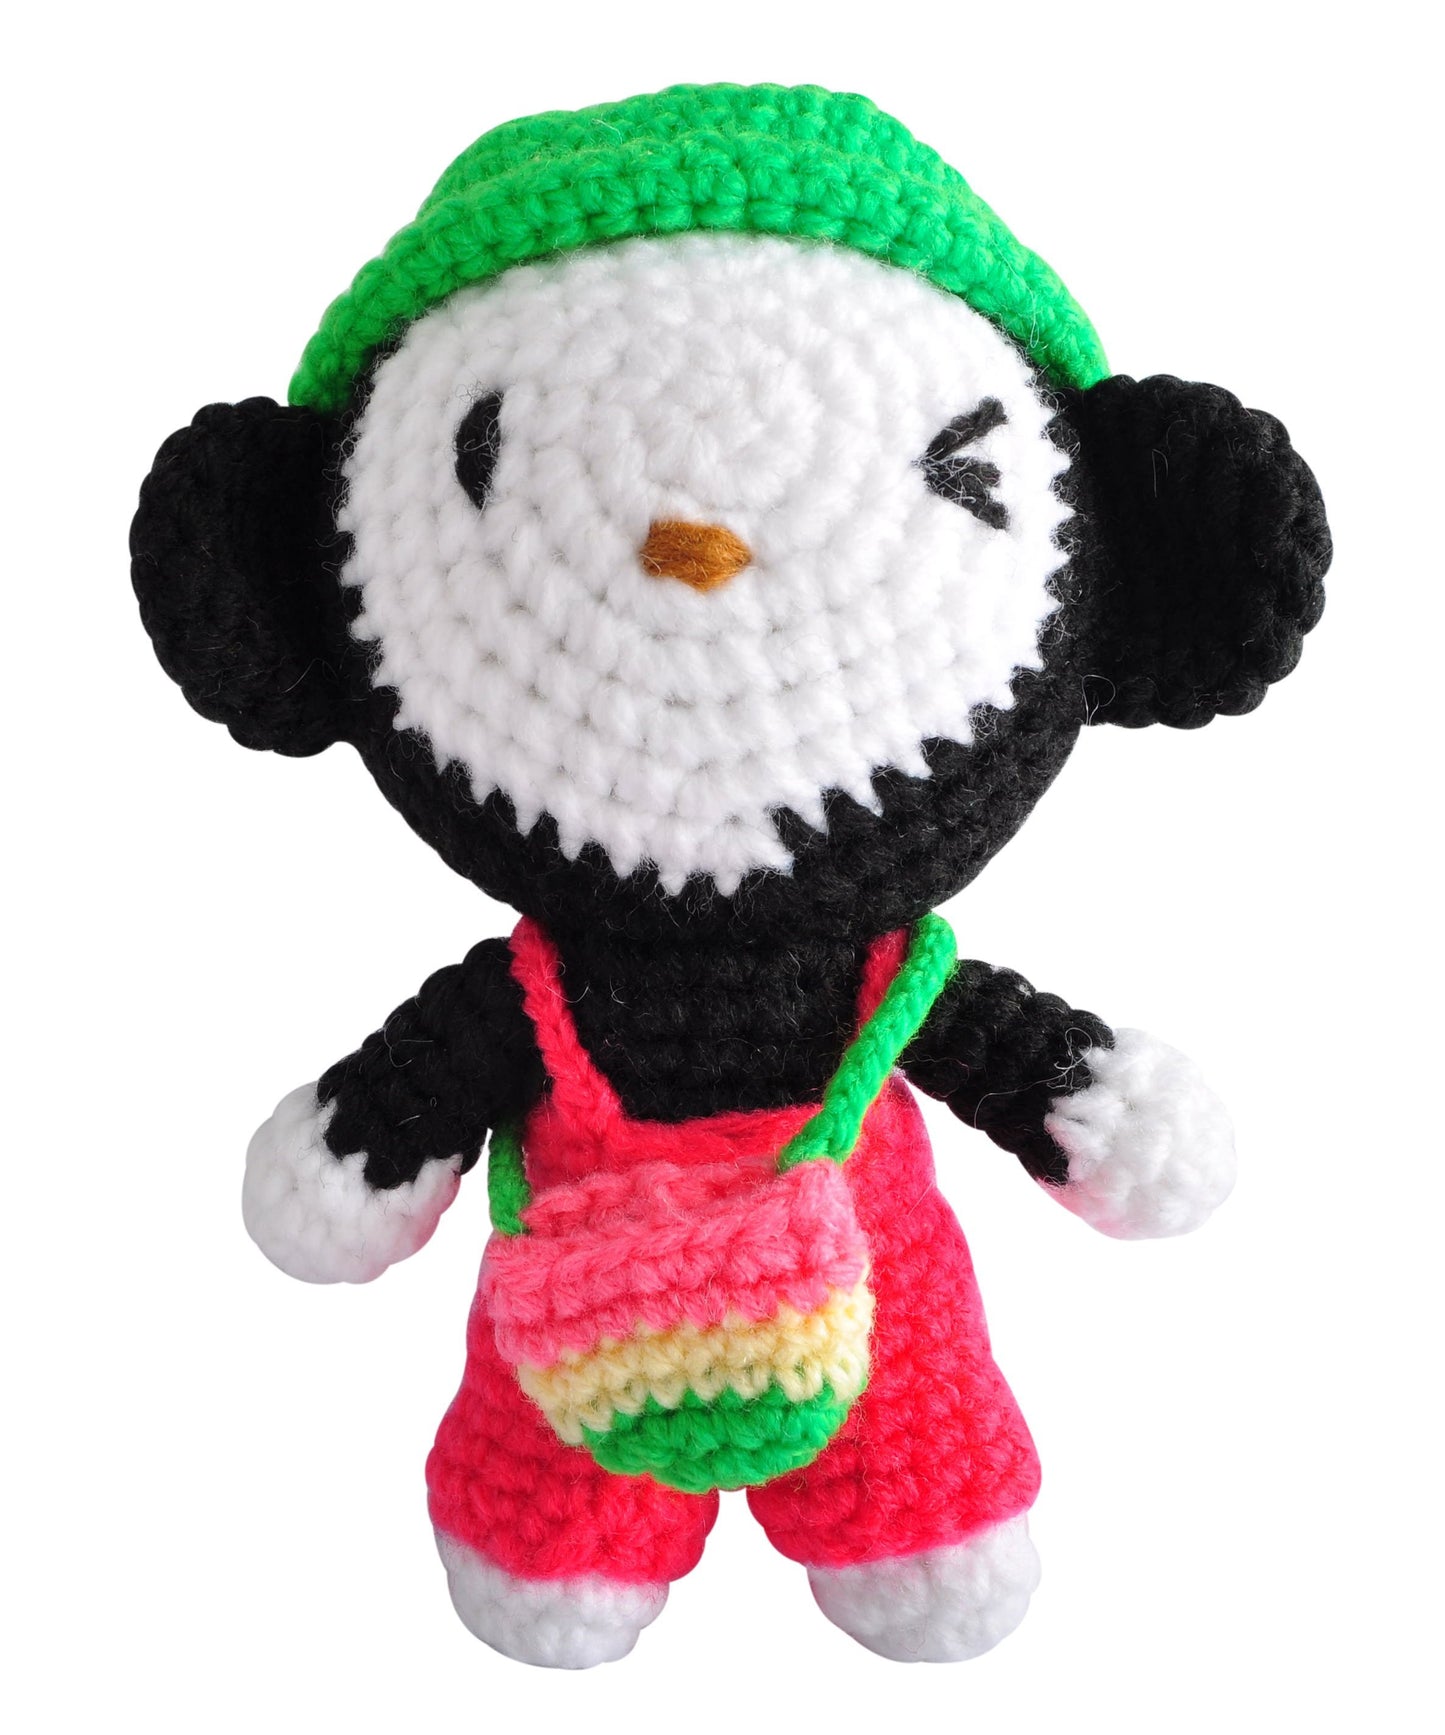 Monkey Handmade Amigurumi Stuffed Toy Knit Crochet Doll VAC